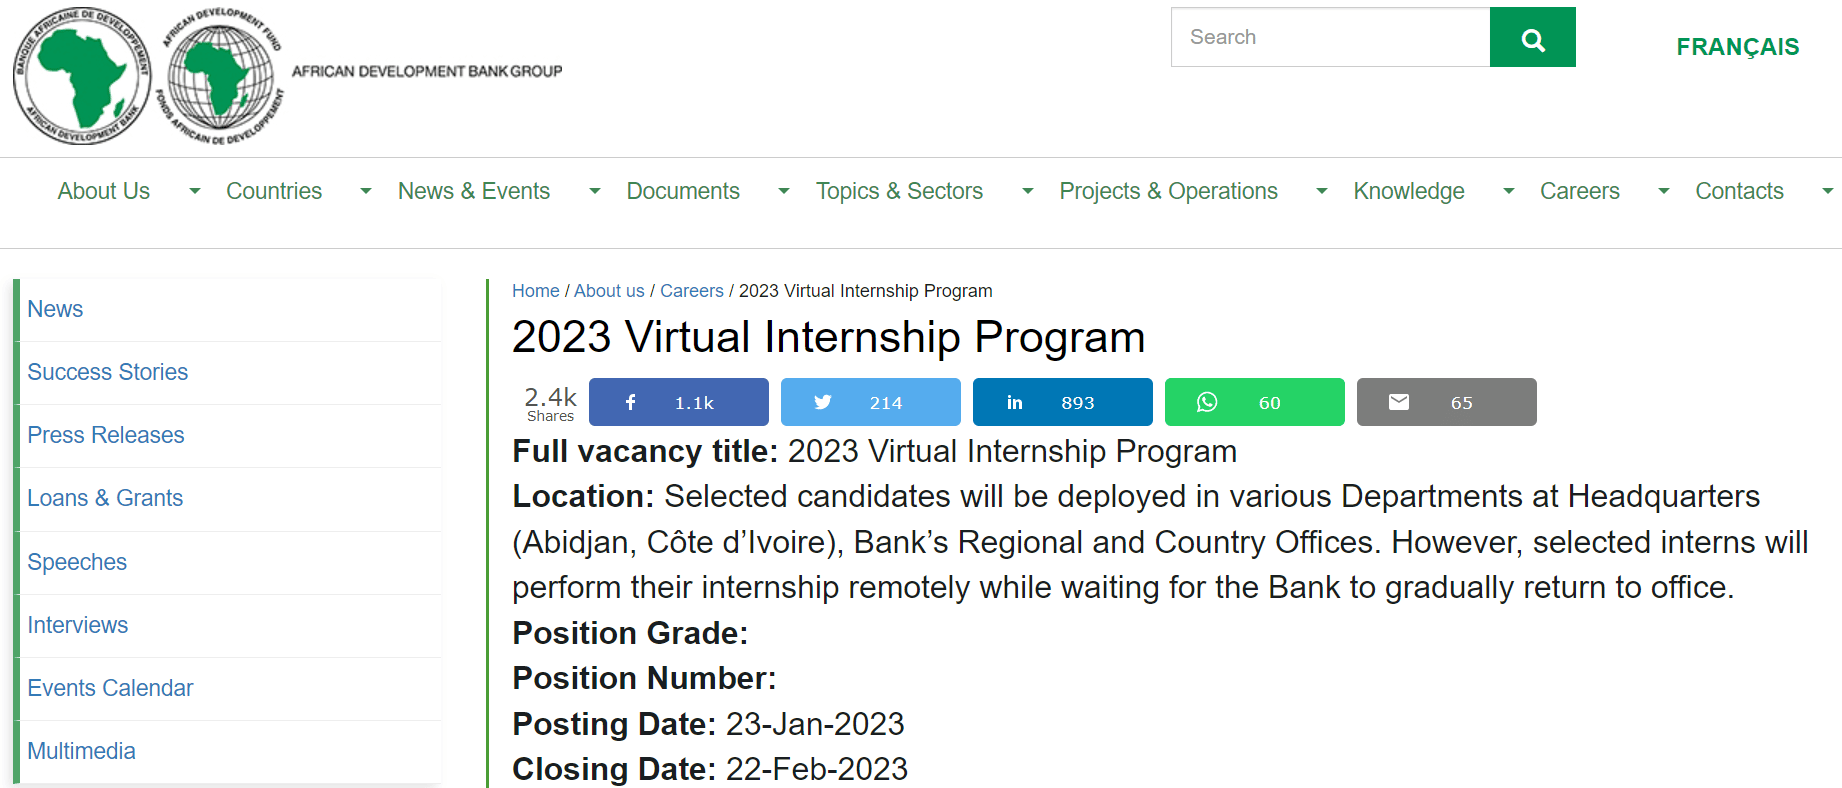 African Development Bank (AfDB) 2023 Virtual Internship Program